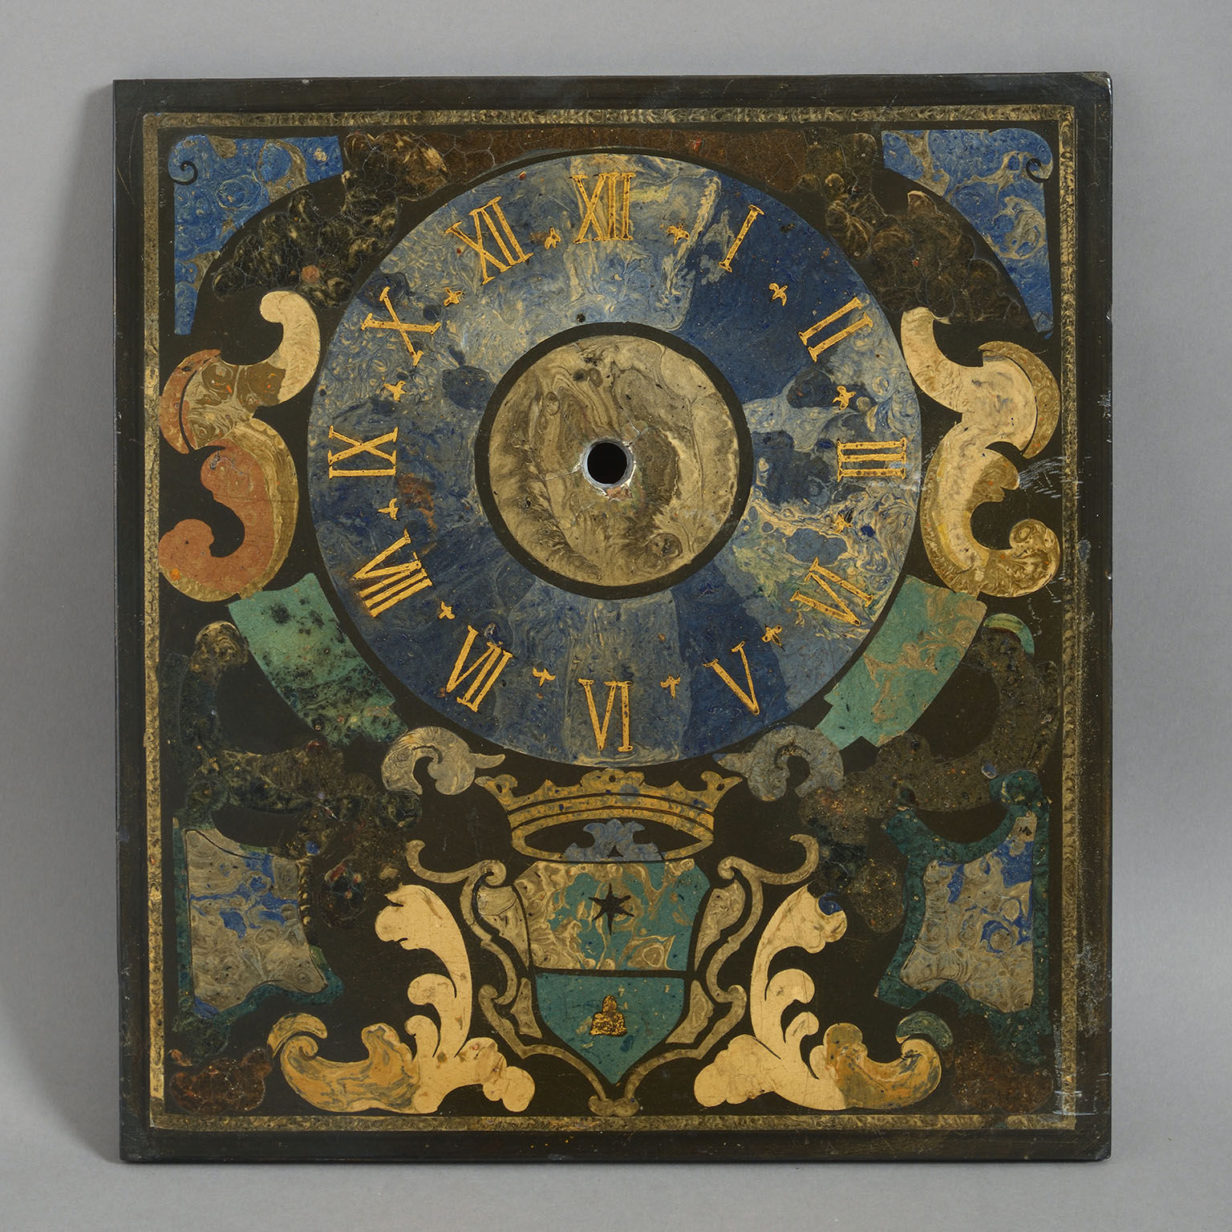 A rare early 18th century italian scagliola clock-face panel